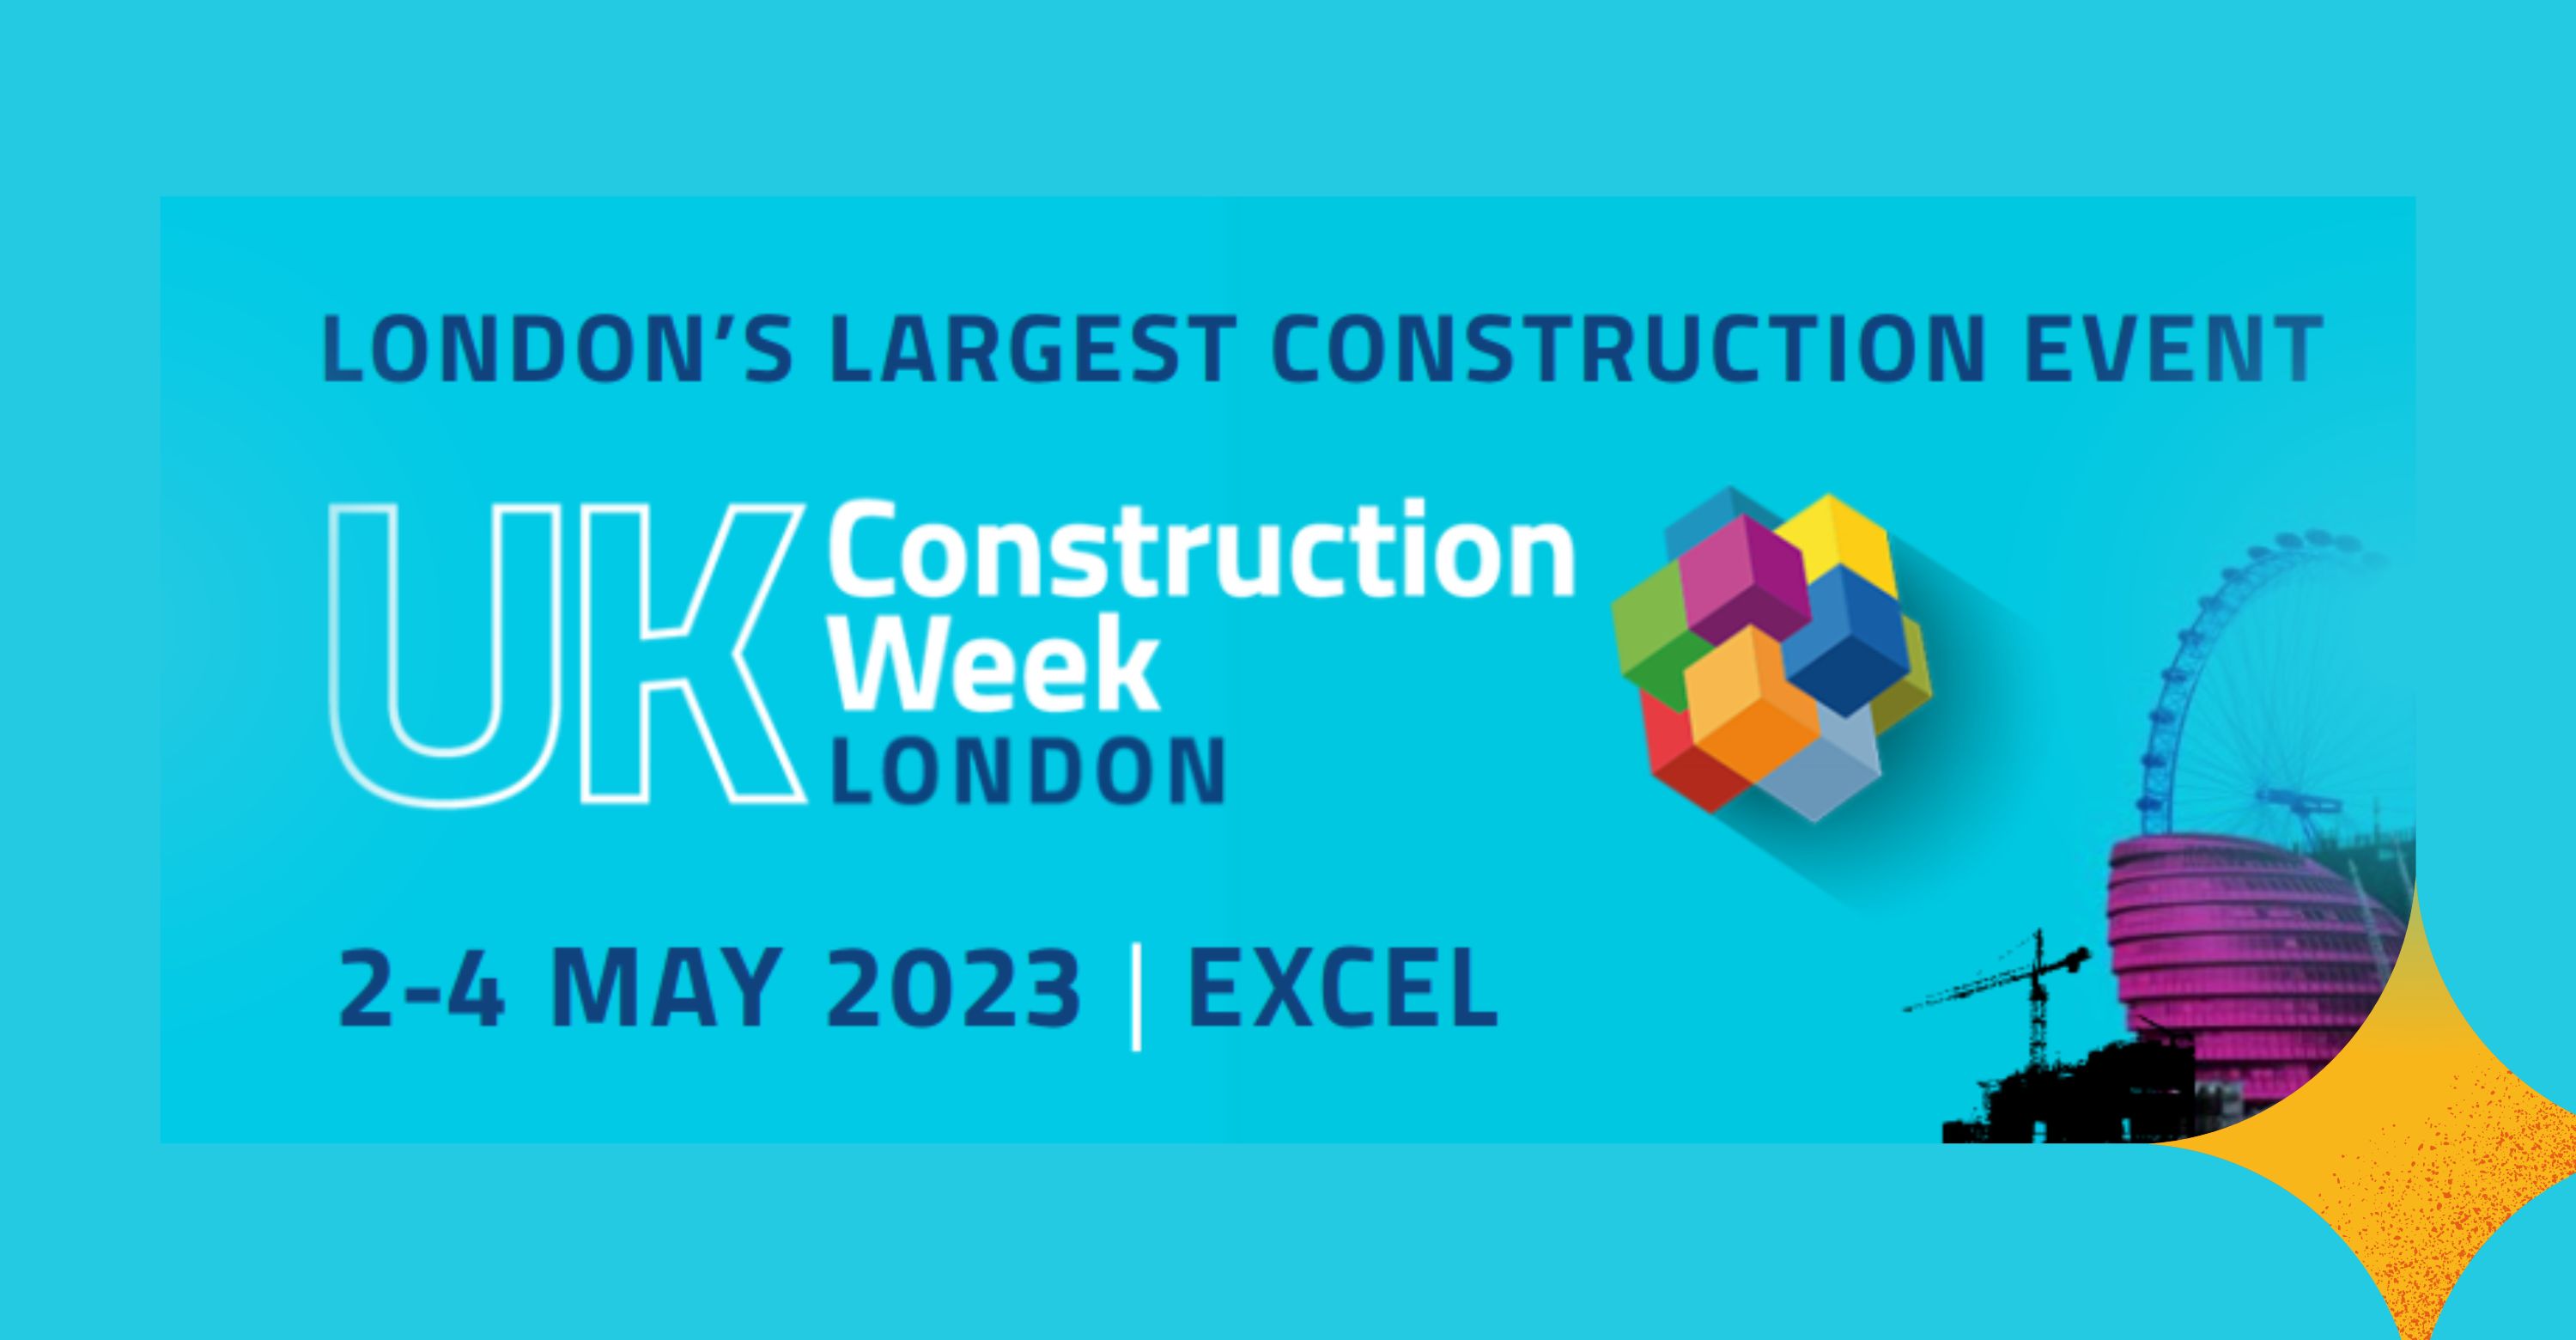 Meet Glodon at UK Construction Week, Embracing Digitalisation for Sustainable Built Environment